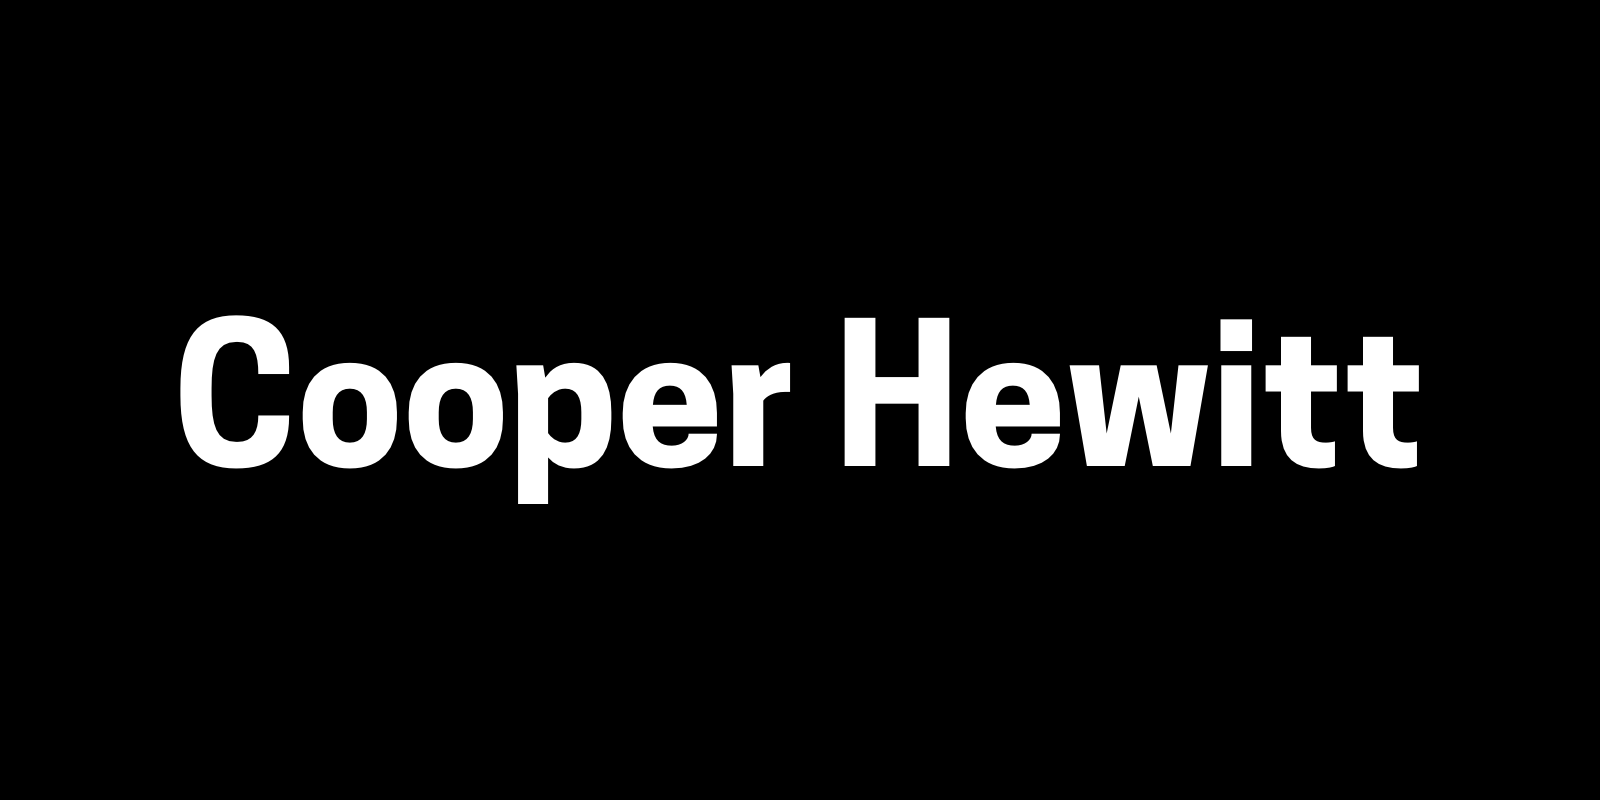 Cooper Hewitt by Chester Jenkins